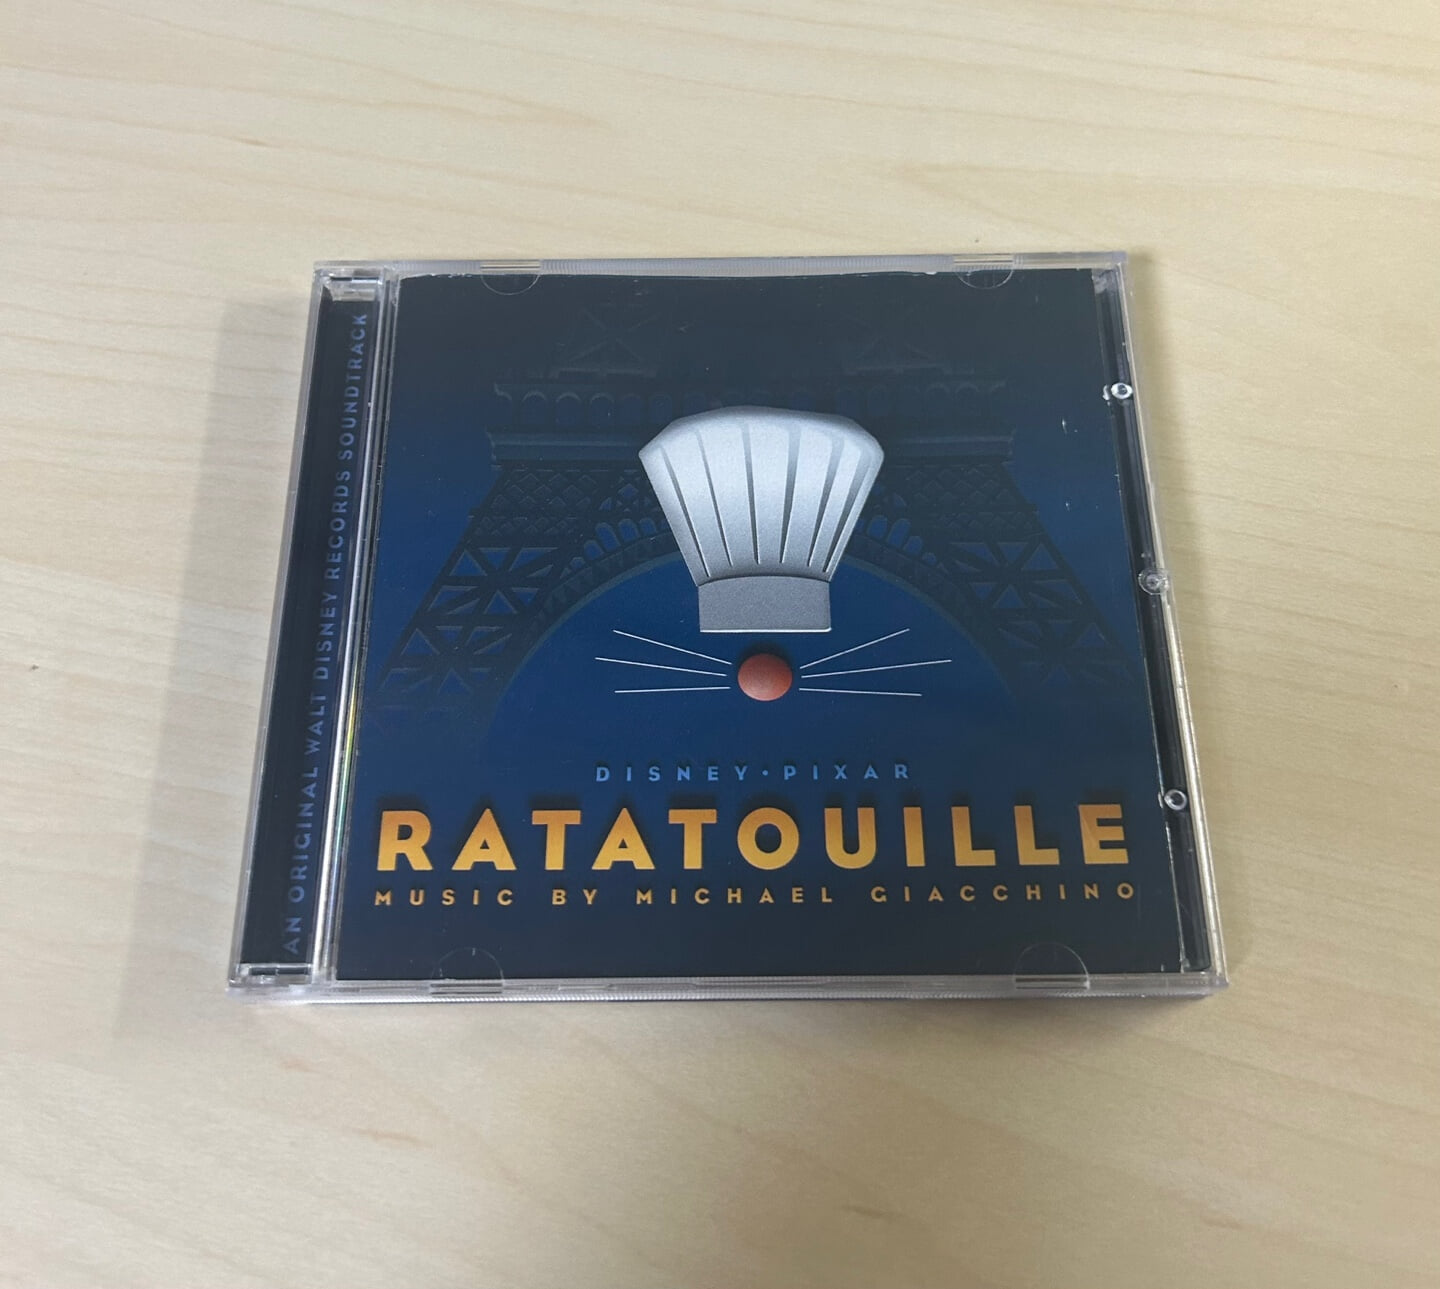 Ratatouille (라따뚜이) OST